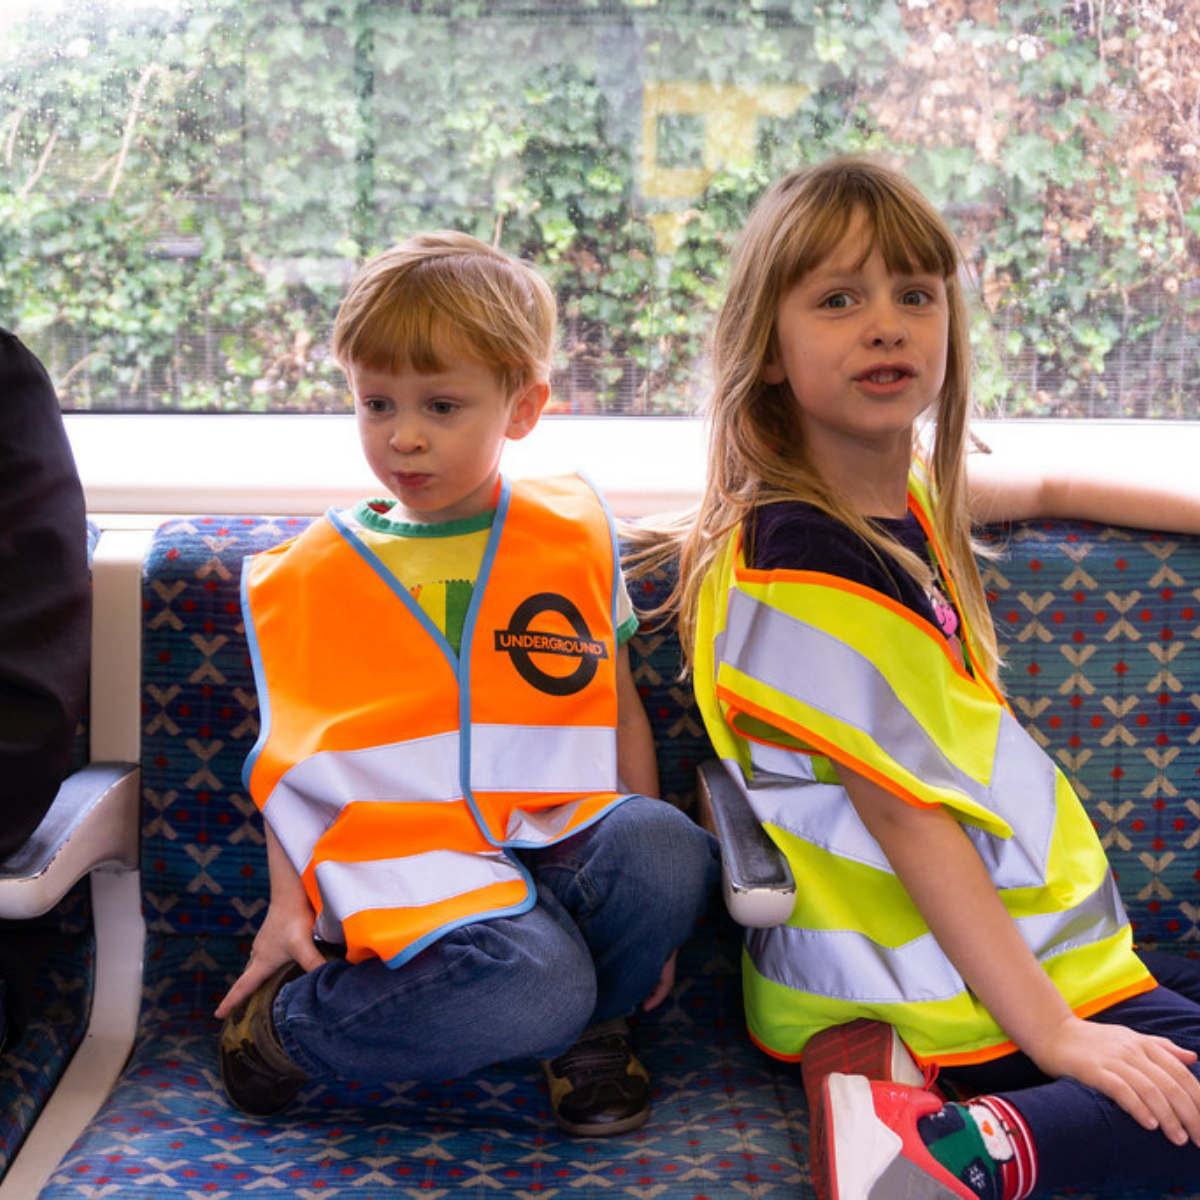 School kids wearing hi-vis vests on way to school